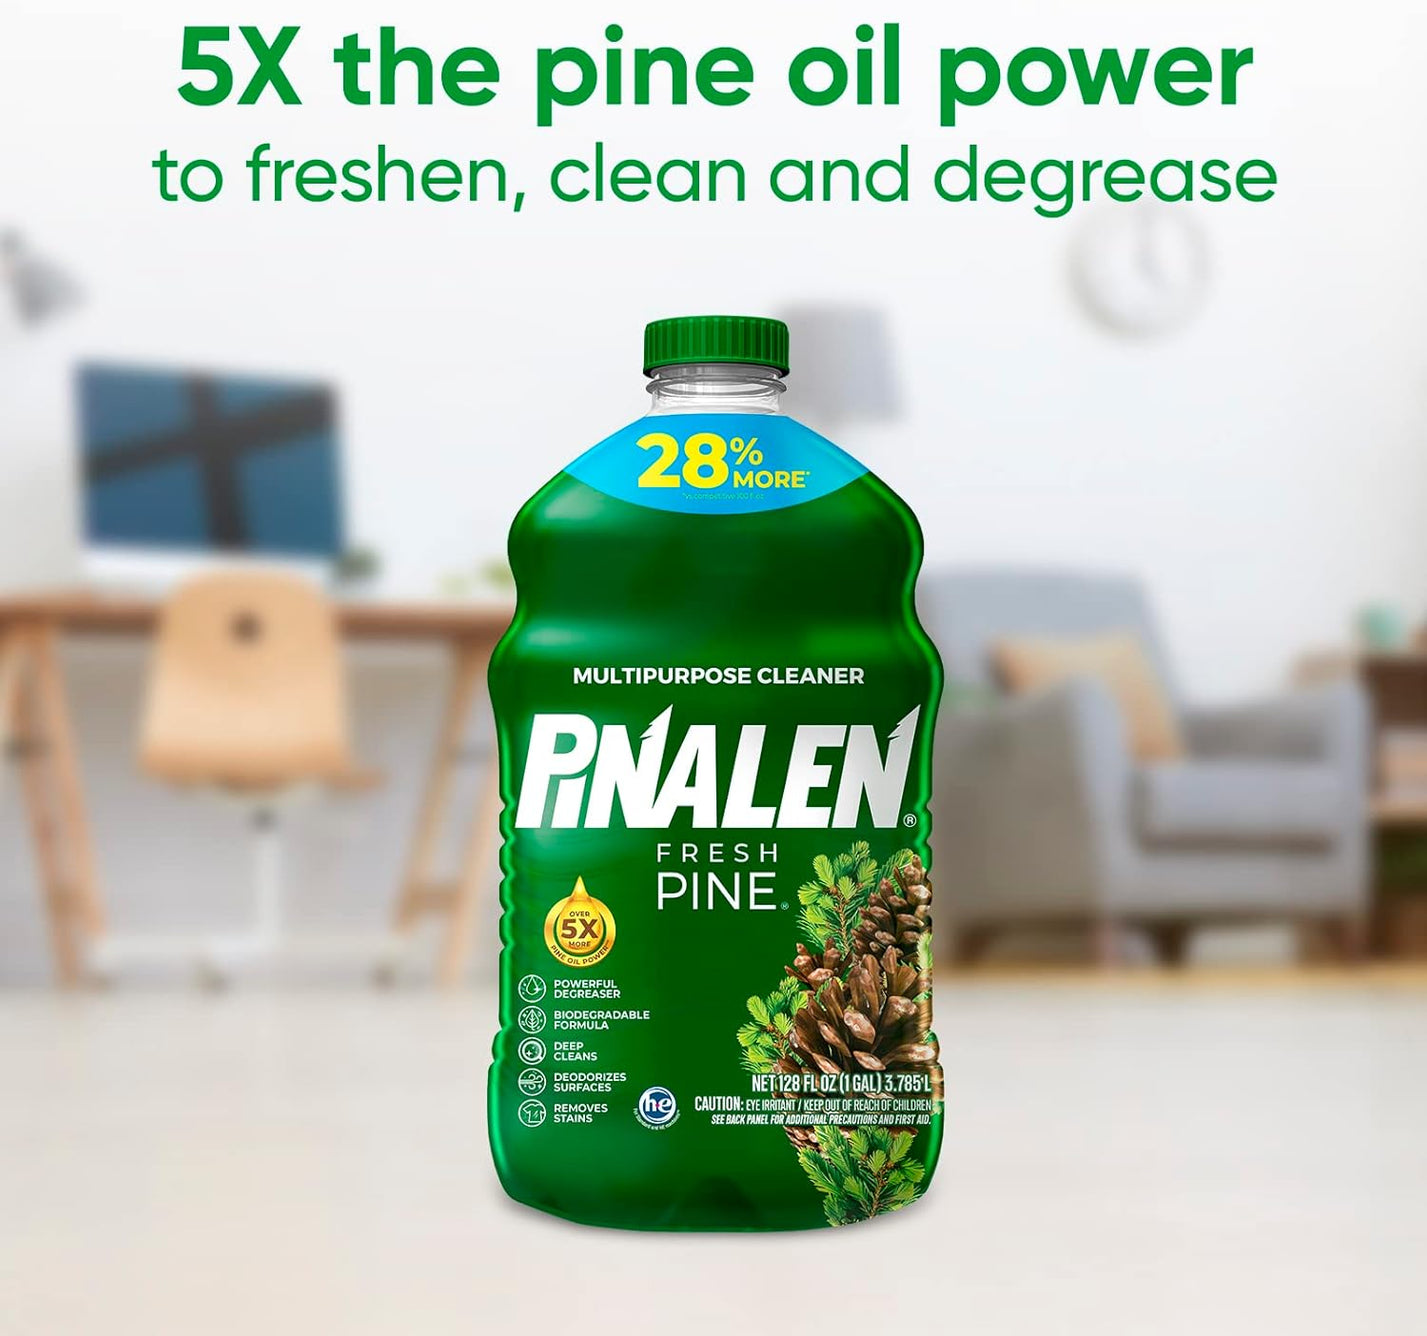 PINALEN  -  Original Fresh Pine Multipurpose Cleaner 128 fl.oz.